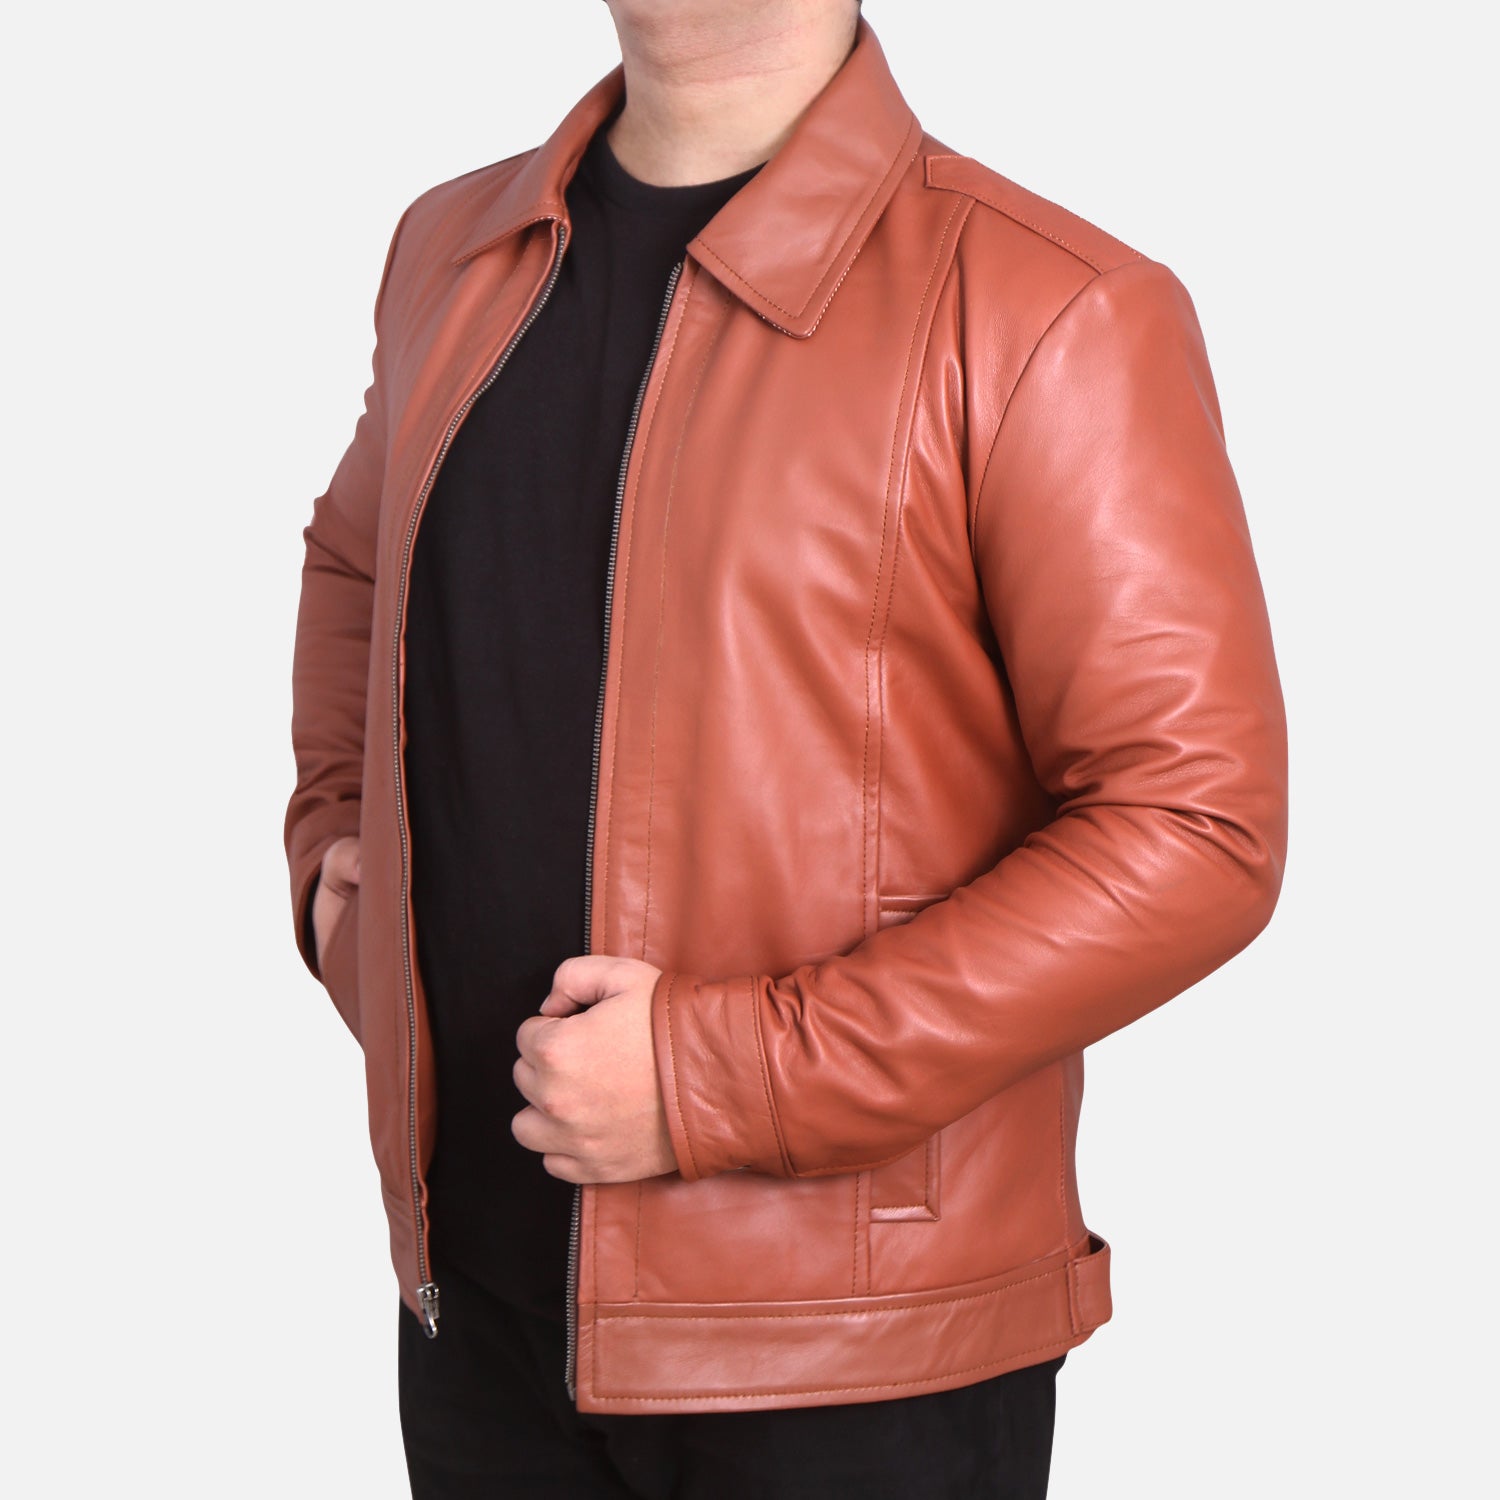 John Wick Tan Leather Jacket